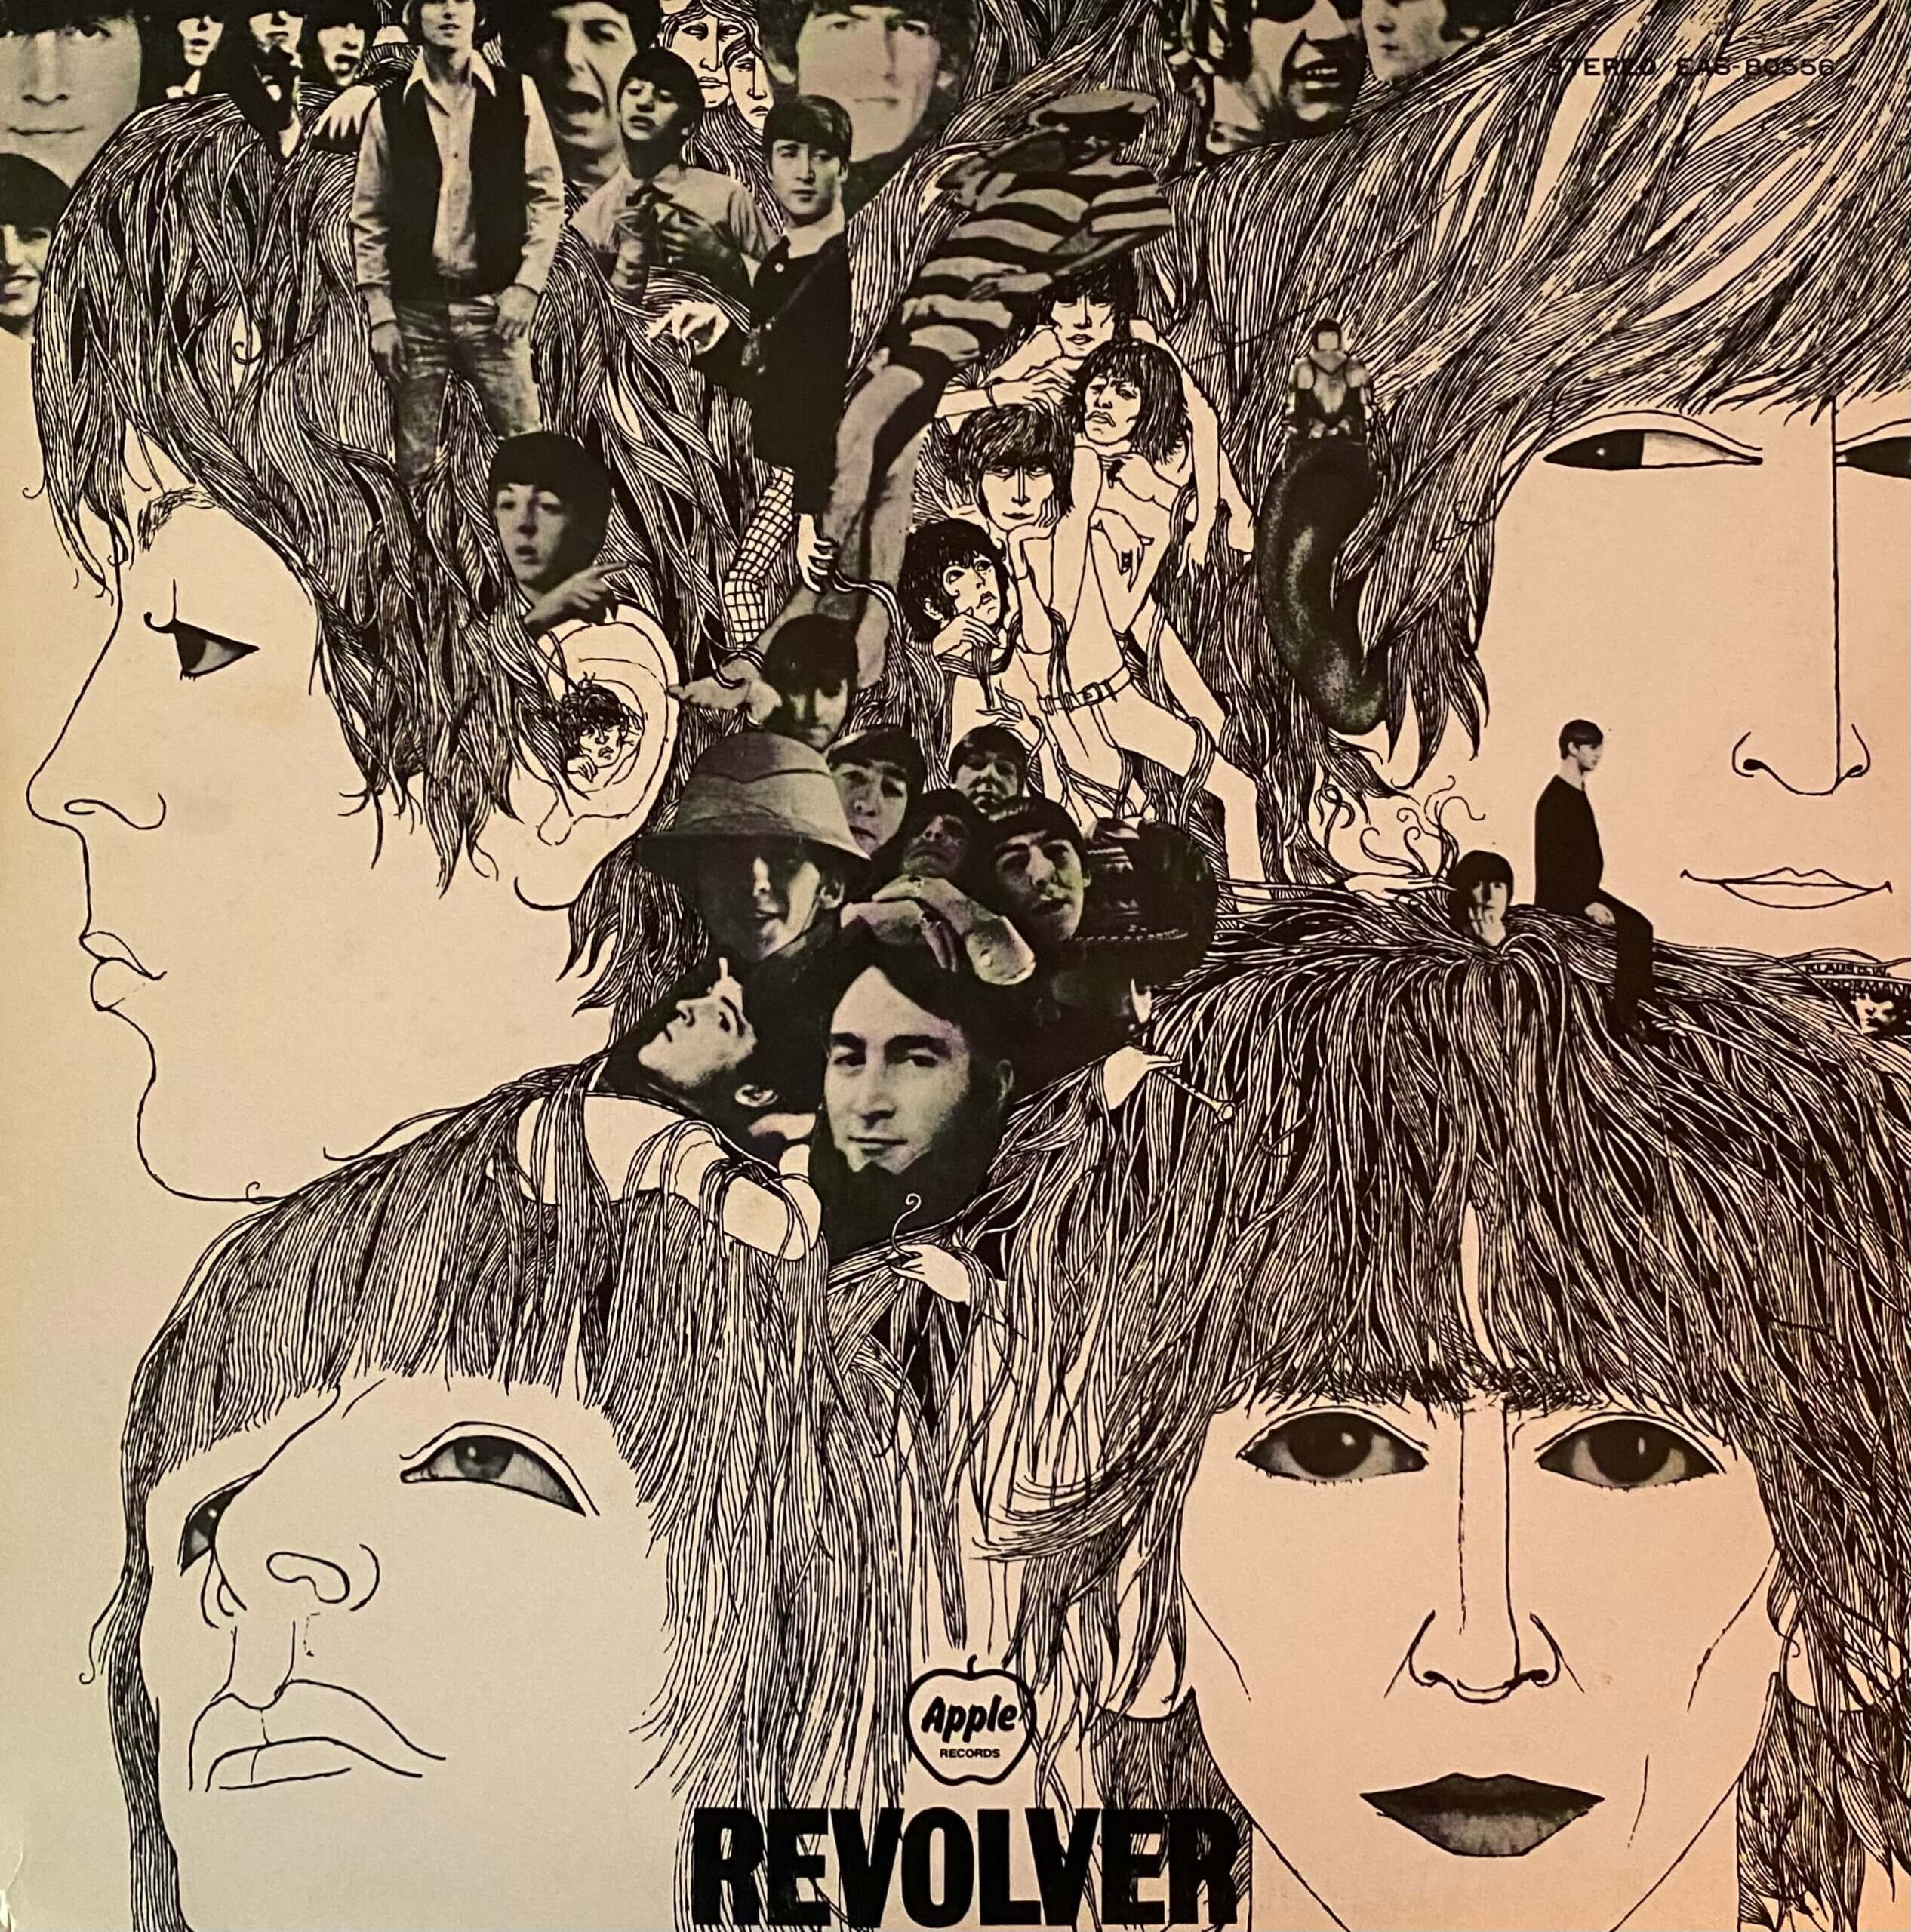 HALCYON DAYS The Beatles Revolver | carvaobrasagaucha.com.br